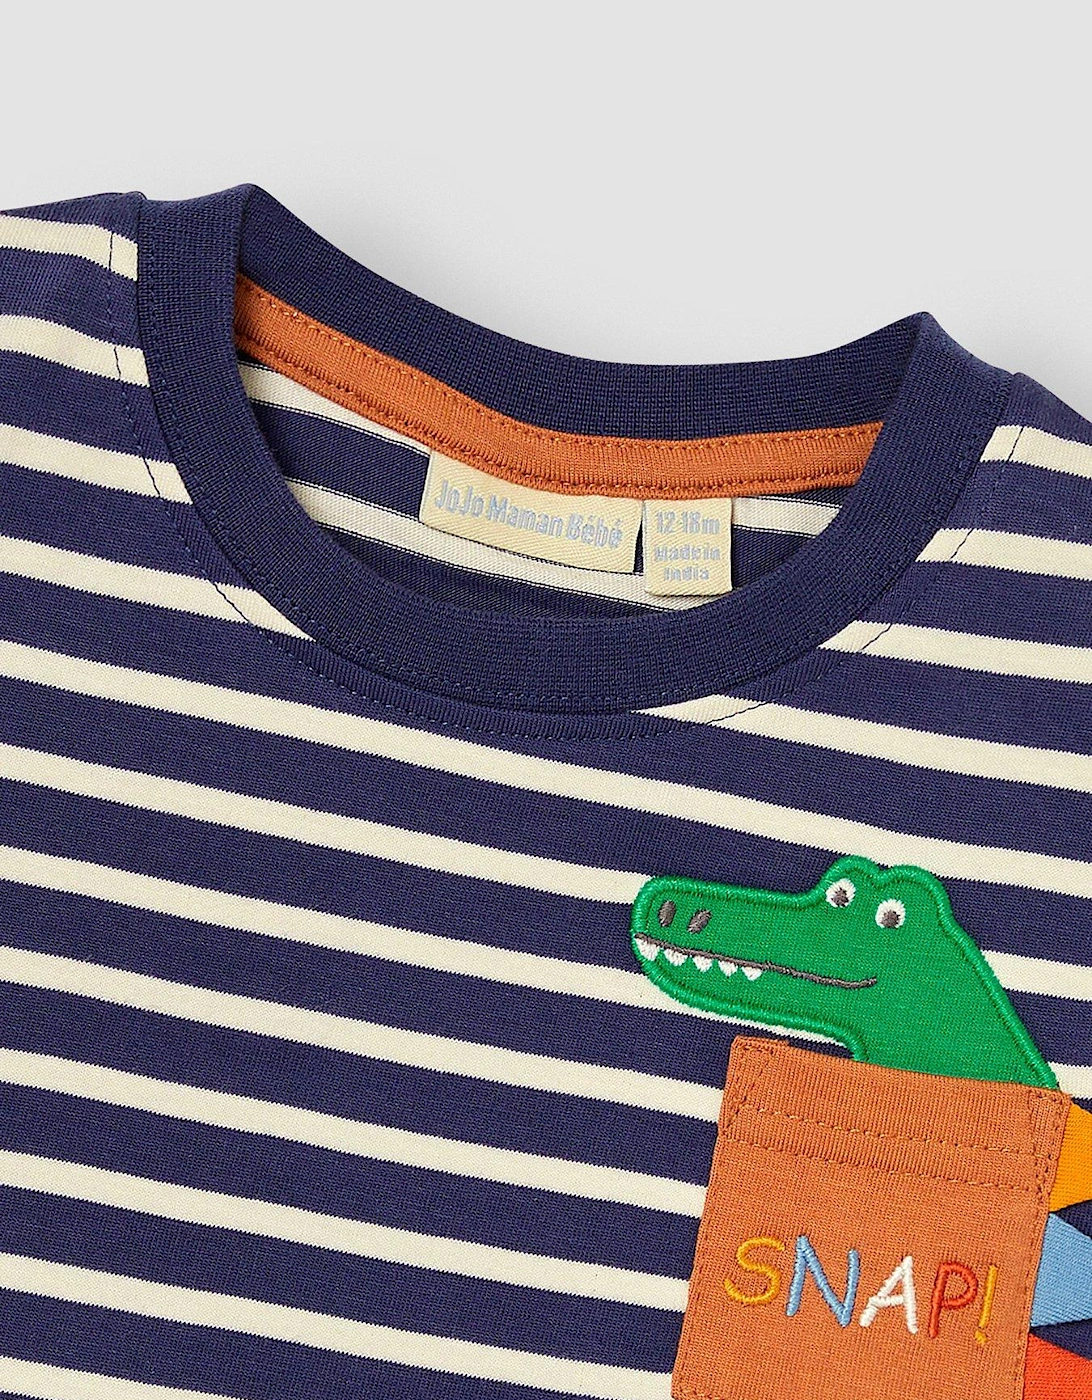 Boys Crocodile Applique Pocket T-Shirt - Blue